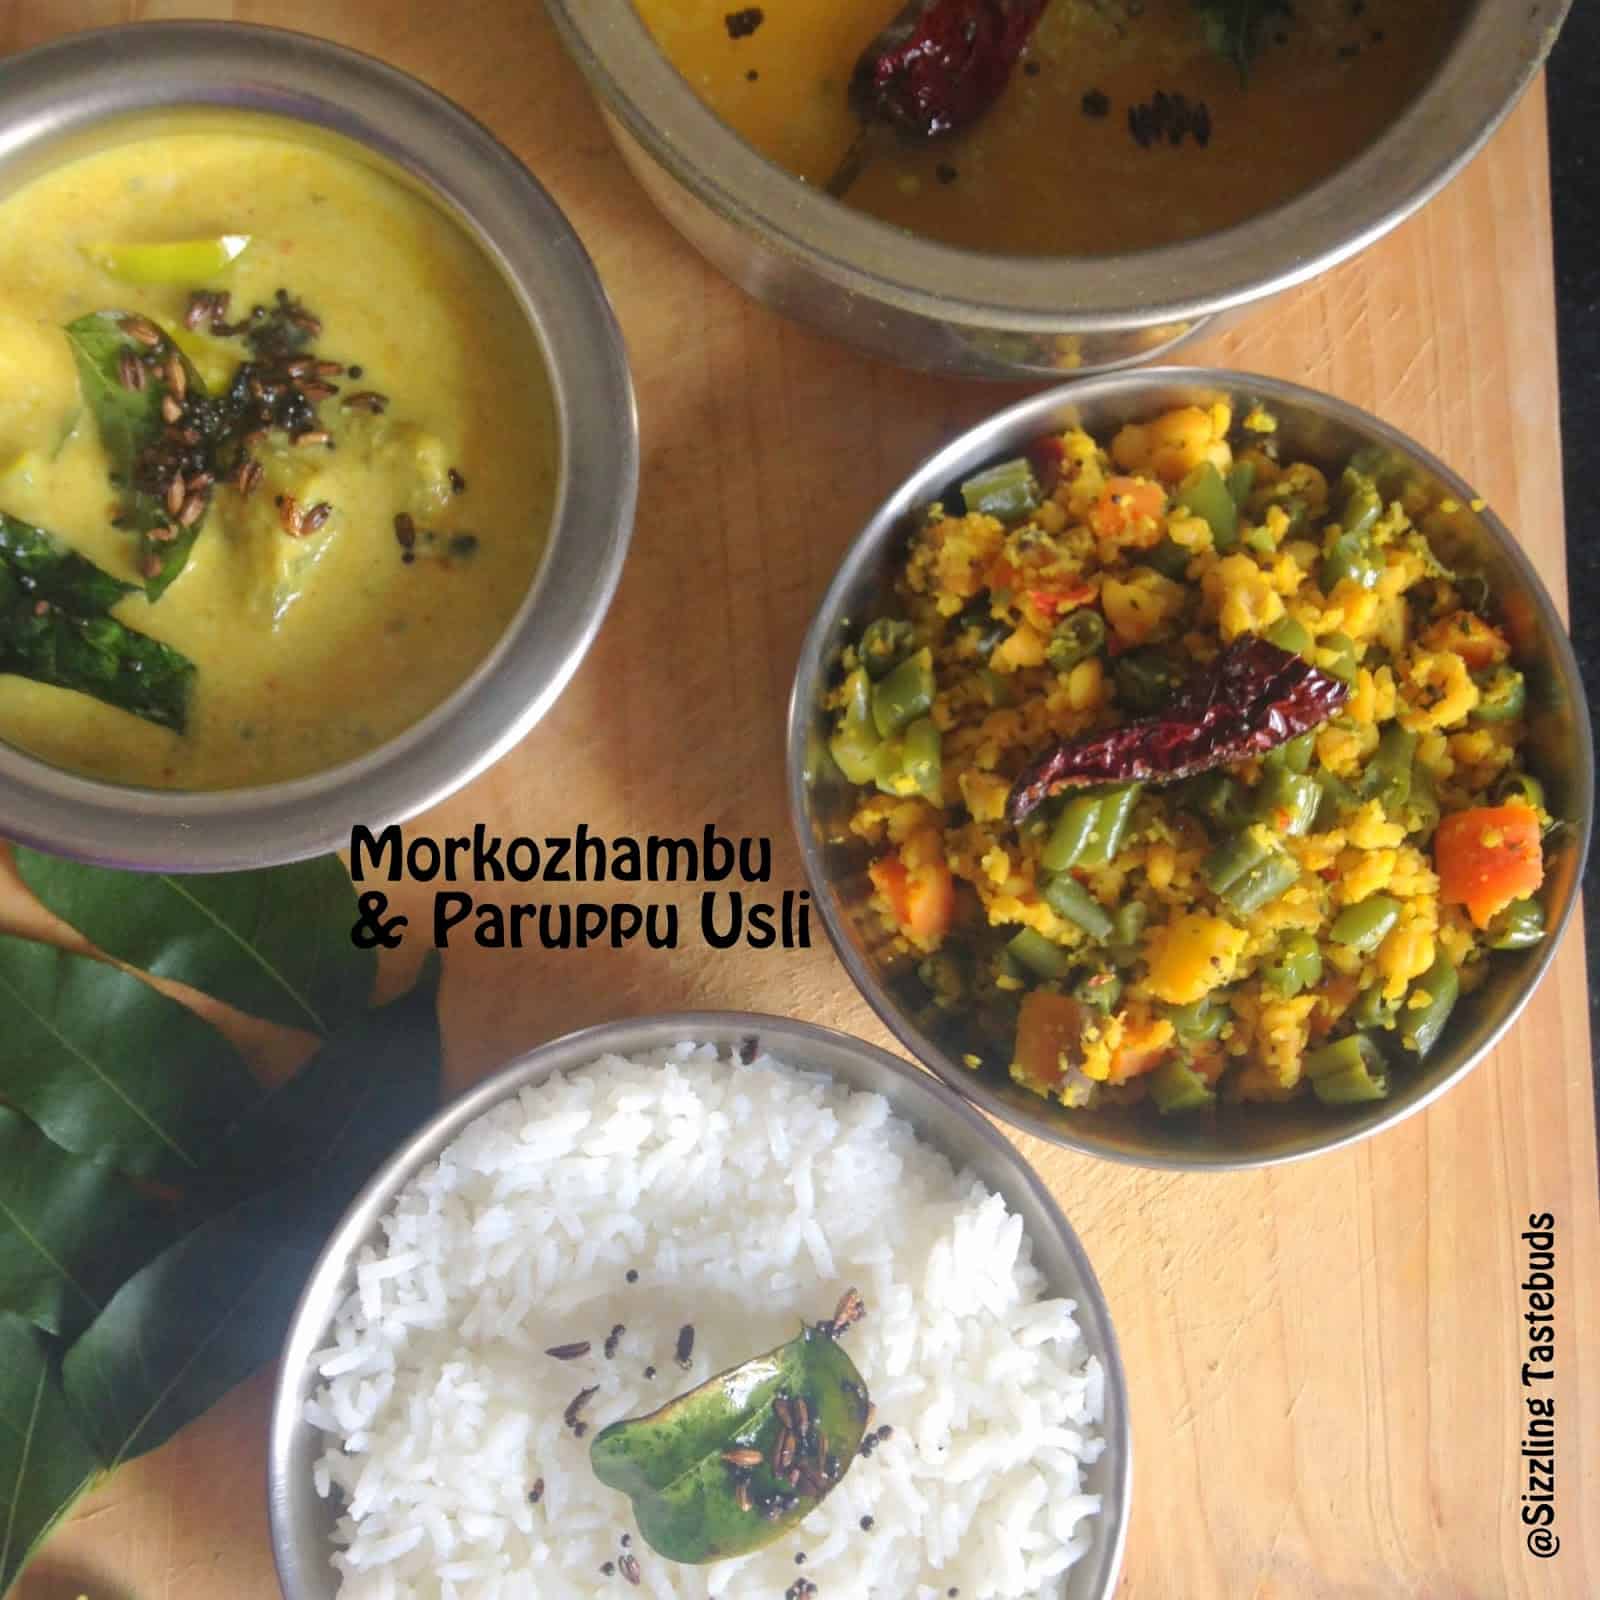 How to make Paruppu Usli | Morkozhambu Paruppu Usli Combo Meal